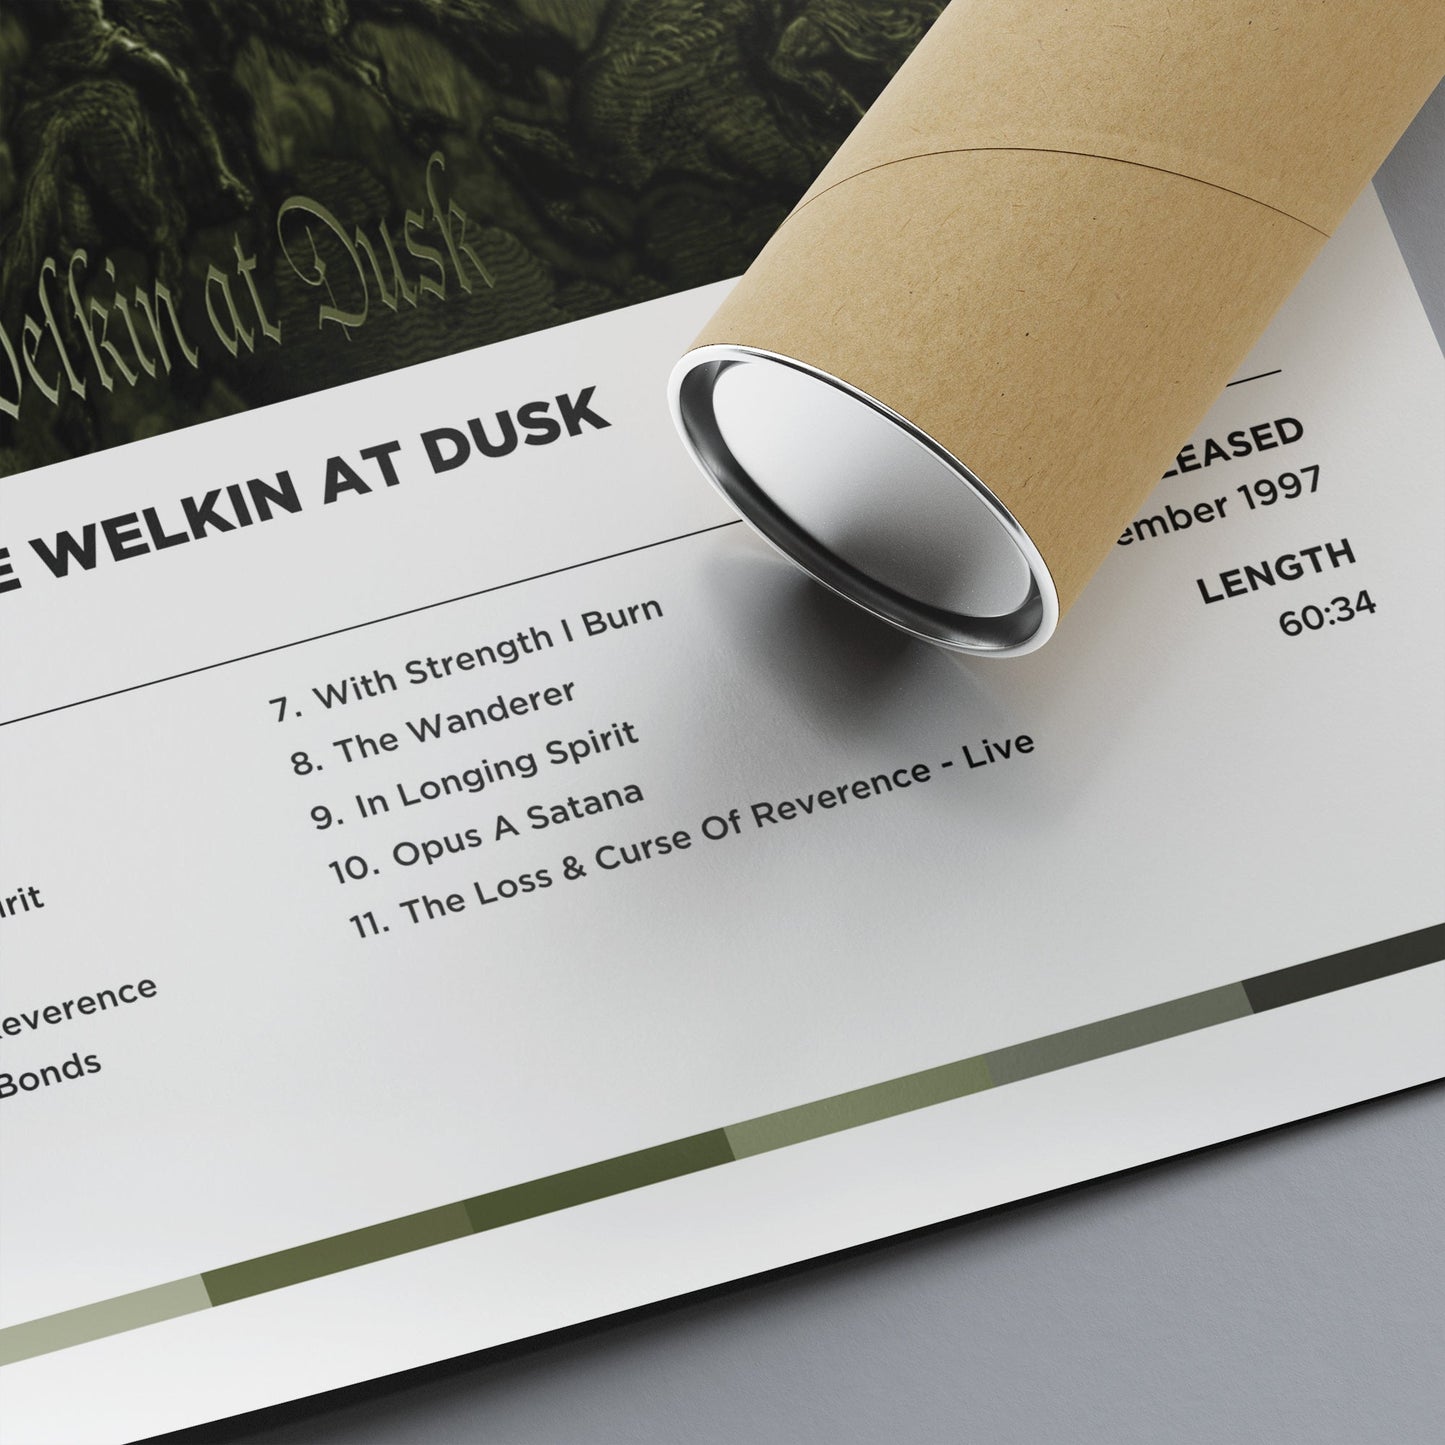 Emperor - Anthems to the Welkin at Dusk Poster Print | Framed Options | Album Cover Artwork